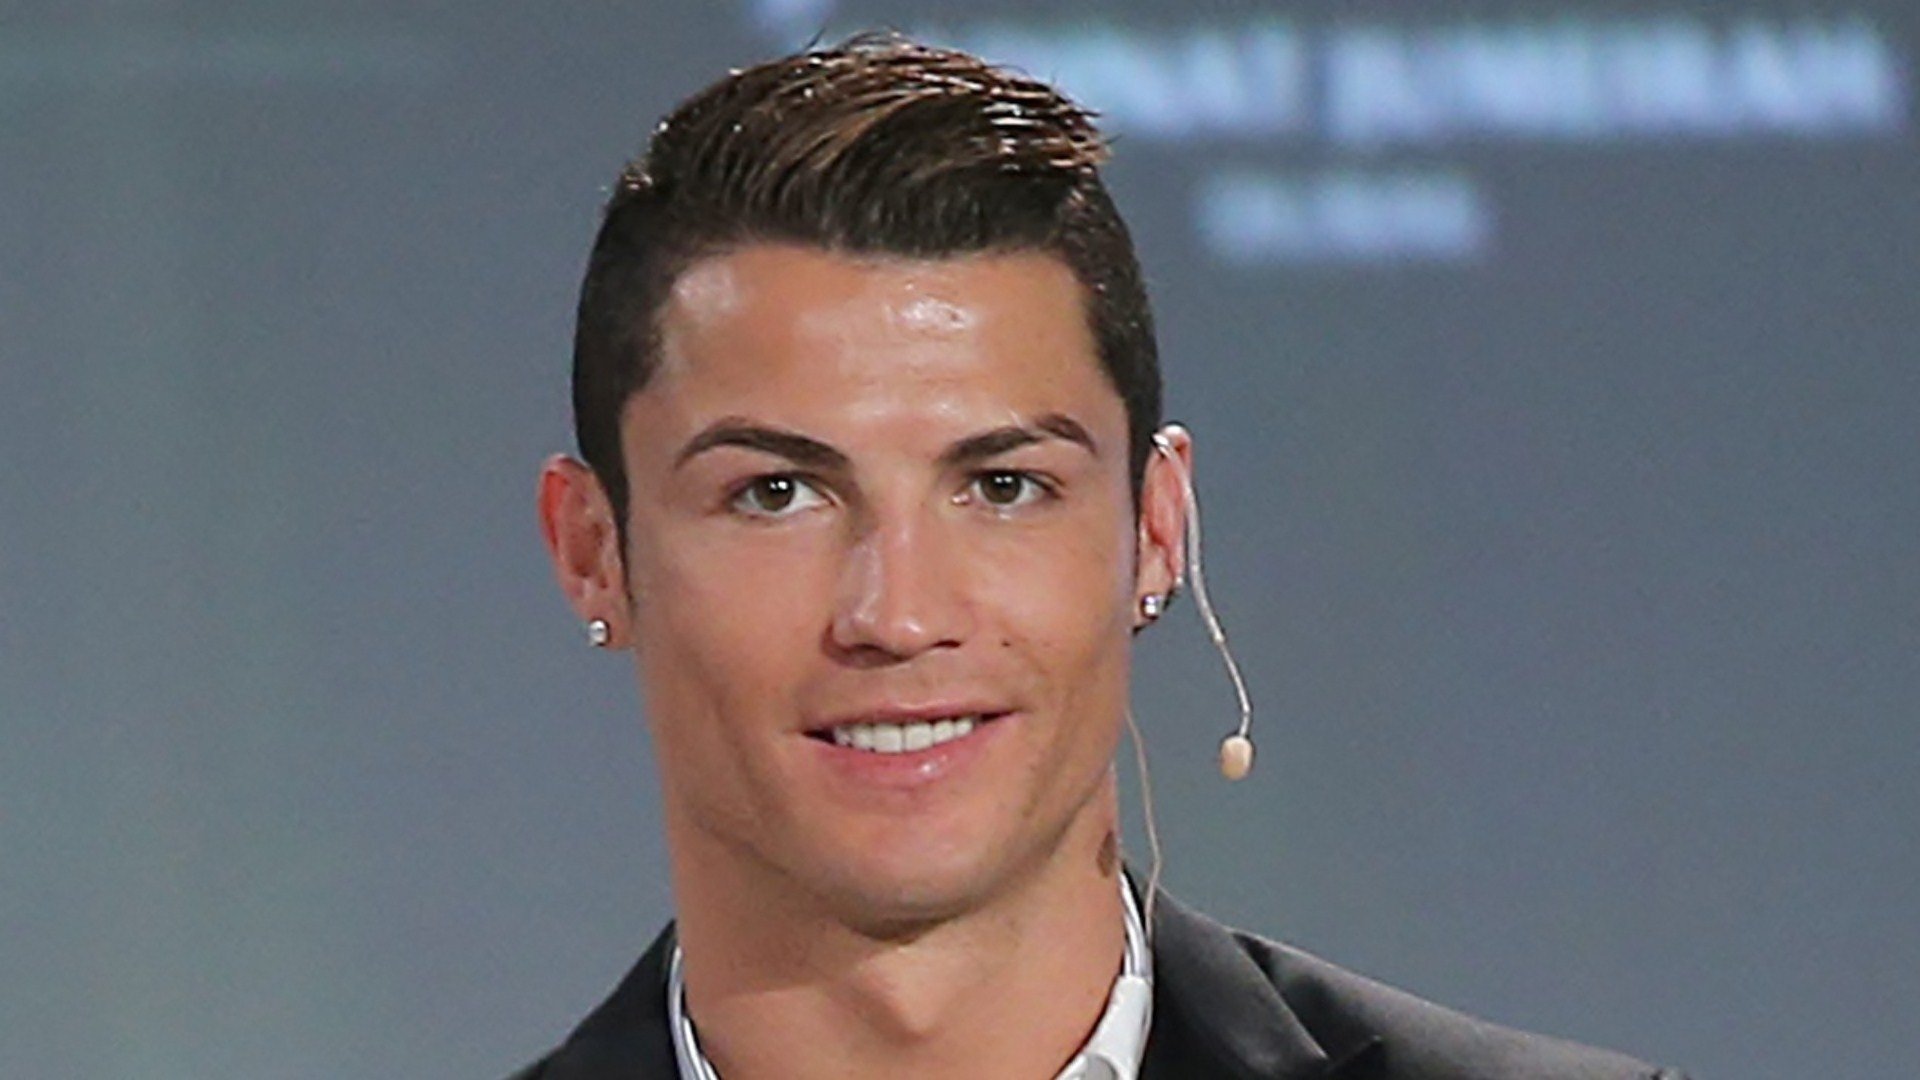 High resolution Cristiano Ronaldo (CR7) hd 1080p wallpaper ID:219694 for computer